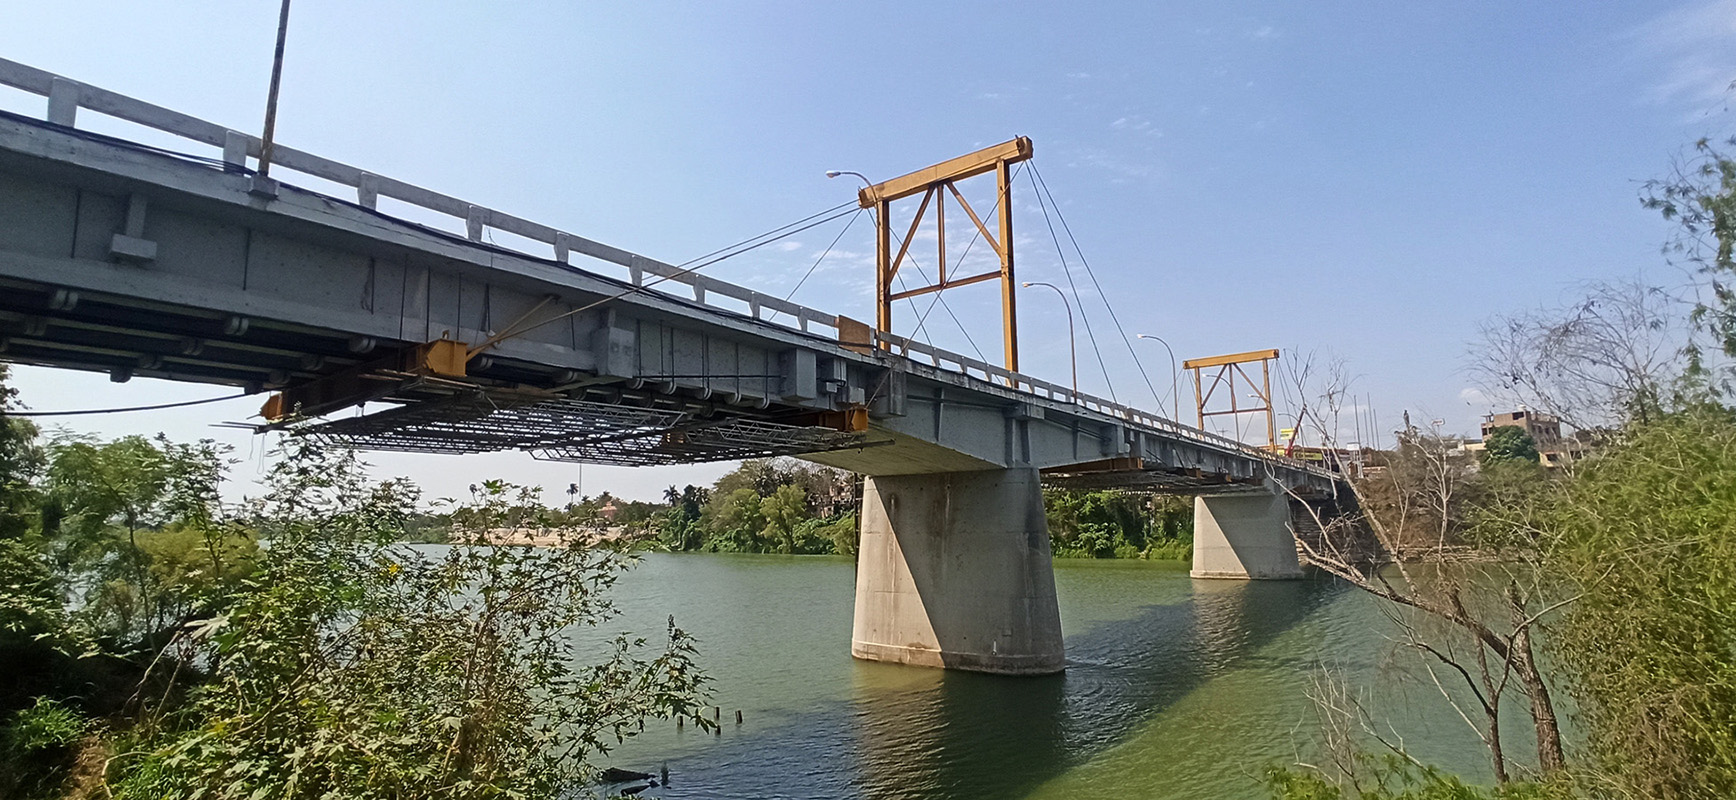 Vista lateral del puente Tampico - Tamazunchale